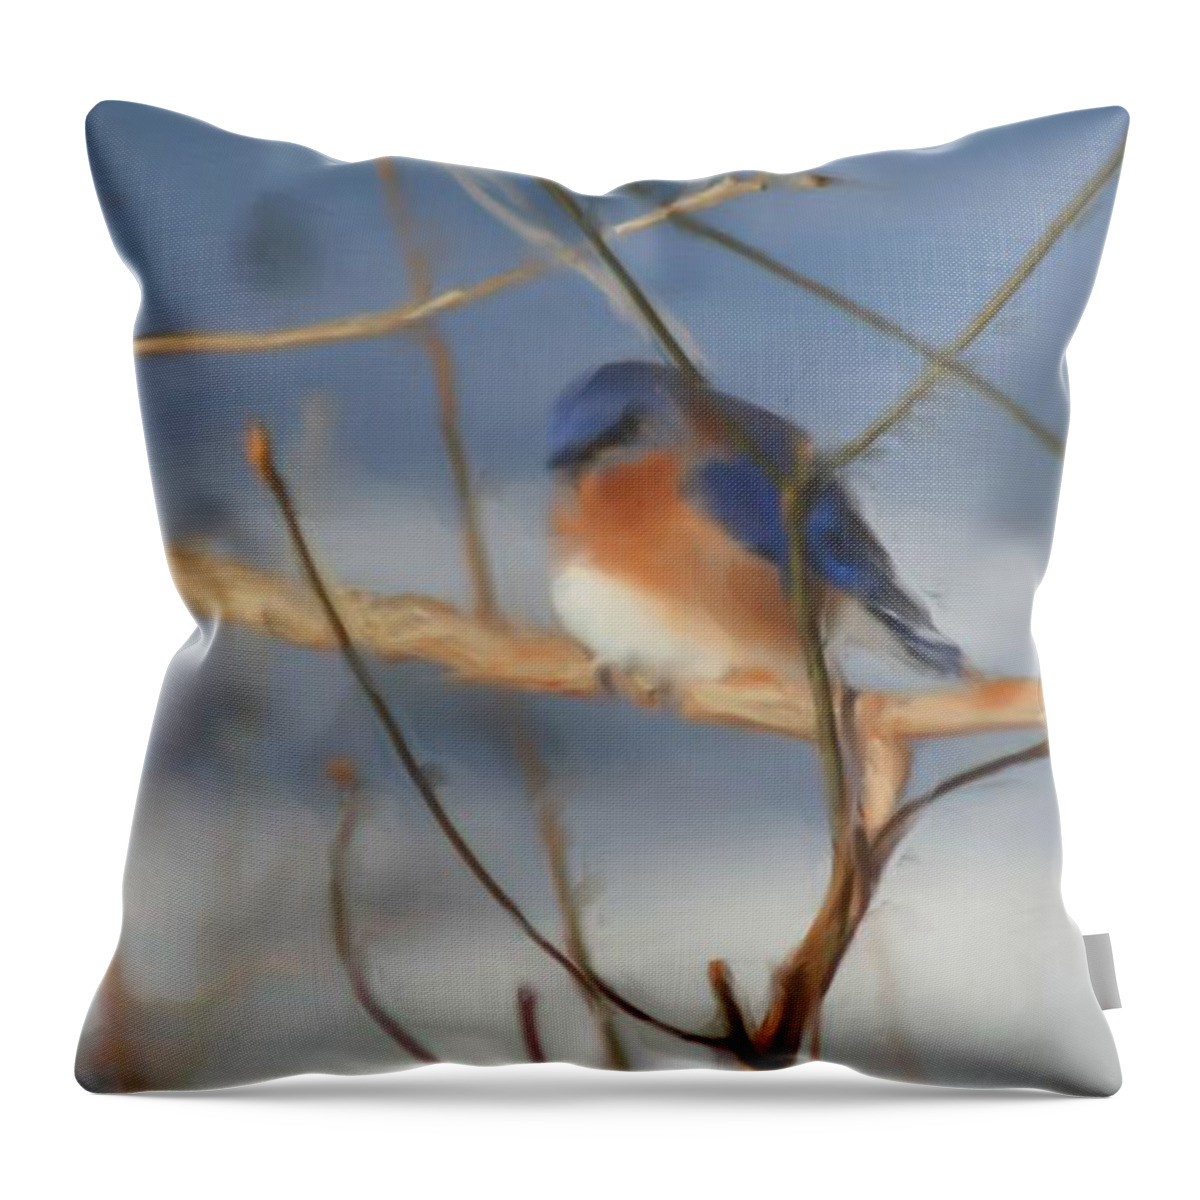 Bluebird Throw Pillow featuring the painting Winter Bluebird Nature Art by Smilin Eyes Treasures